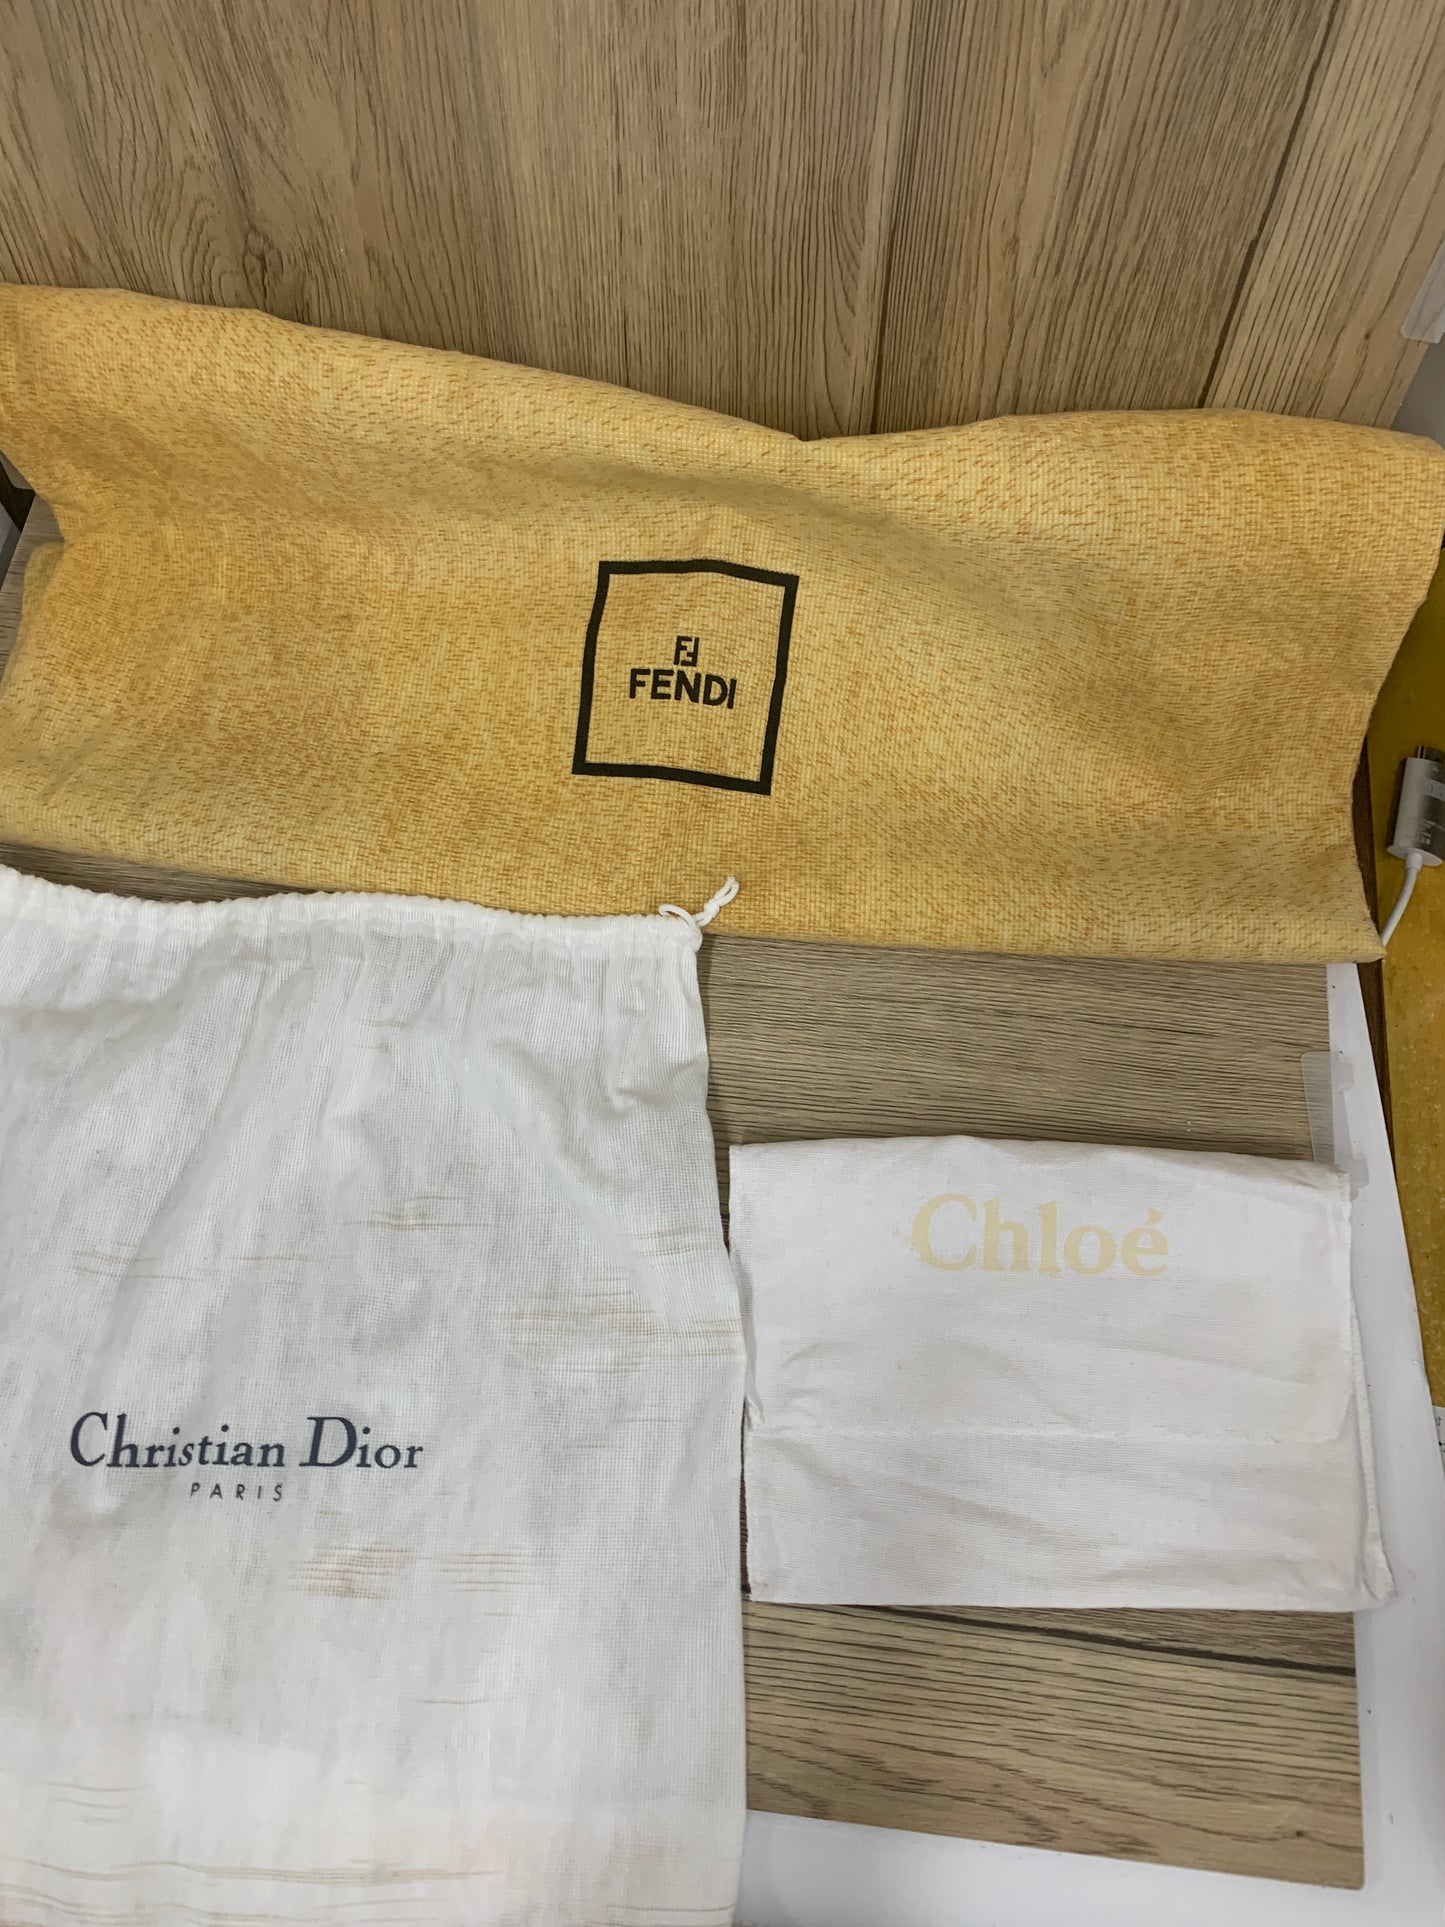 Authentic Fendi Christian Dior Chloe shoe boots bag wallet purse dust bag handbag gift - 8JUN